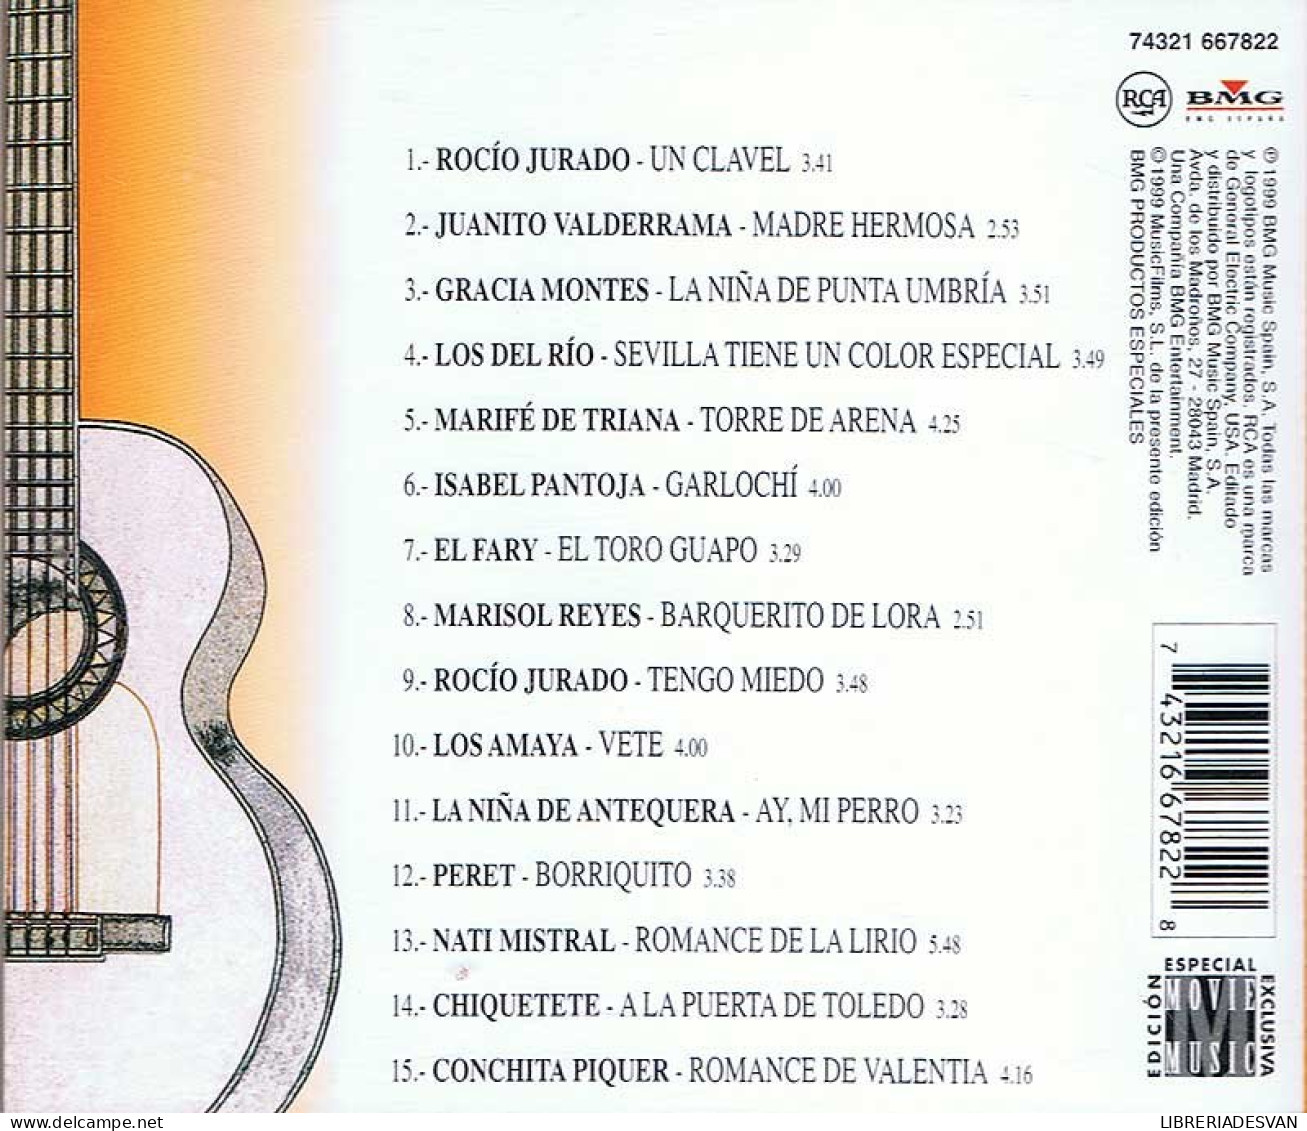 Arte Y Sentimiento 2. Rocío Jurado. Juanito Valderrama... CD - Other - Spanish Music